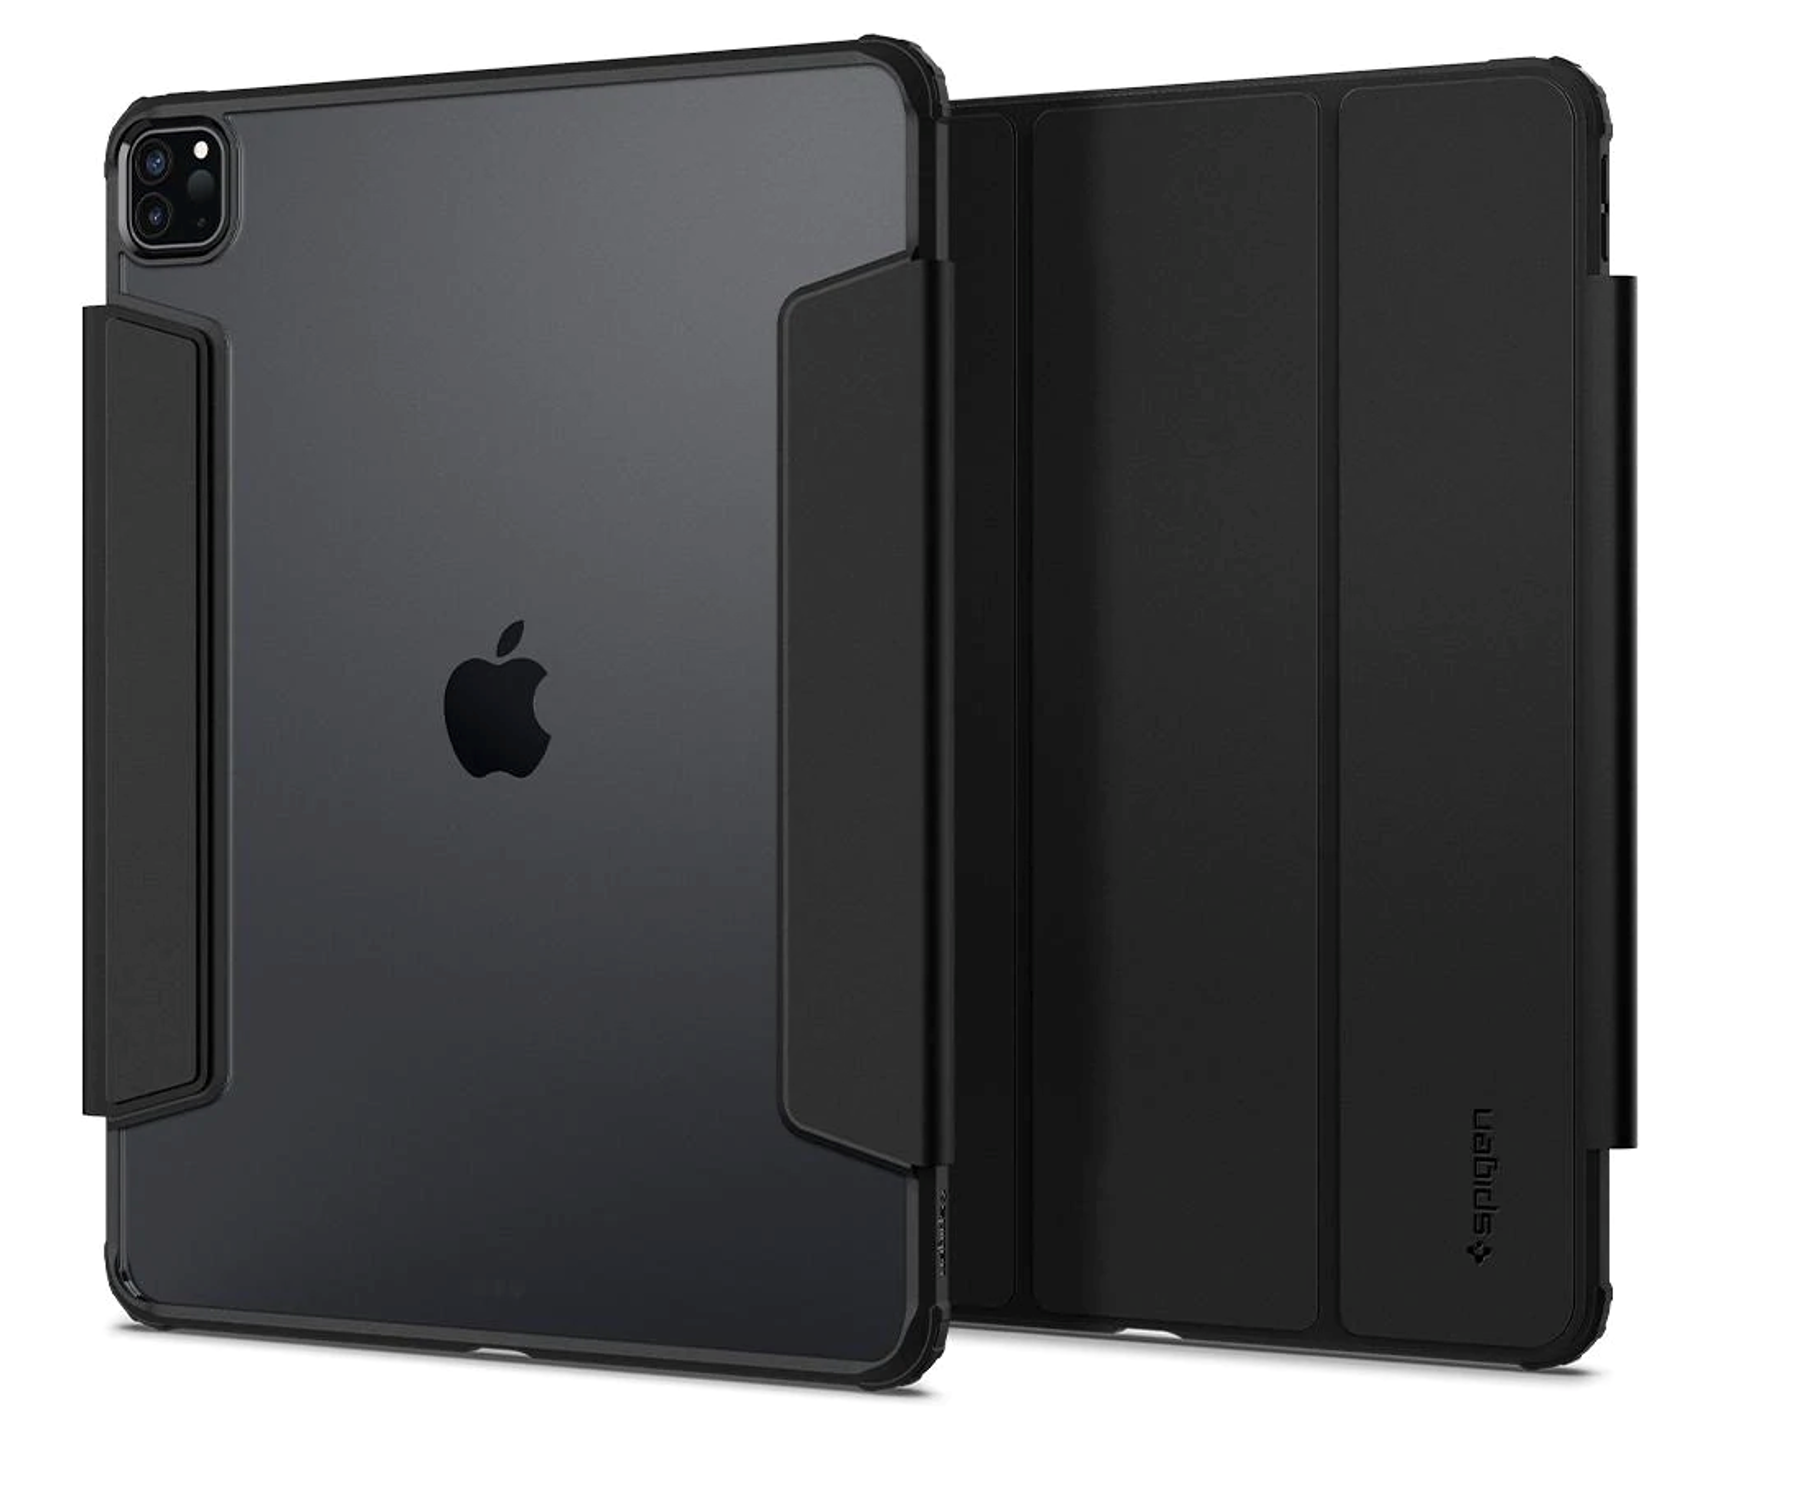 Aanbieding Beschermhoezen. Spigen iPad Pro 12.9 inch case